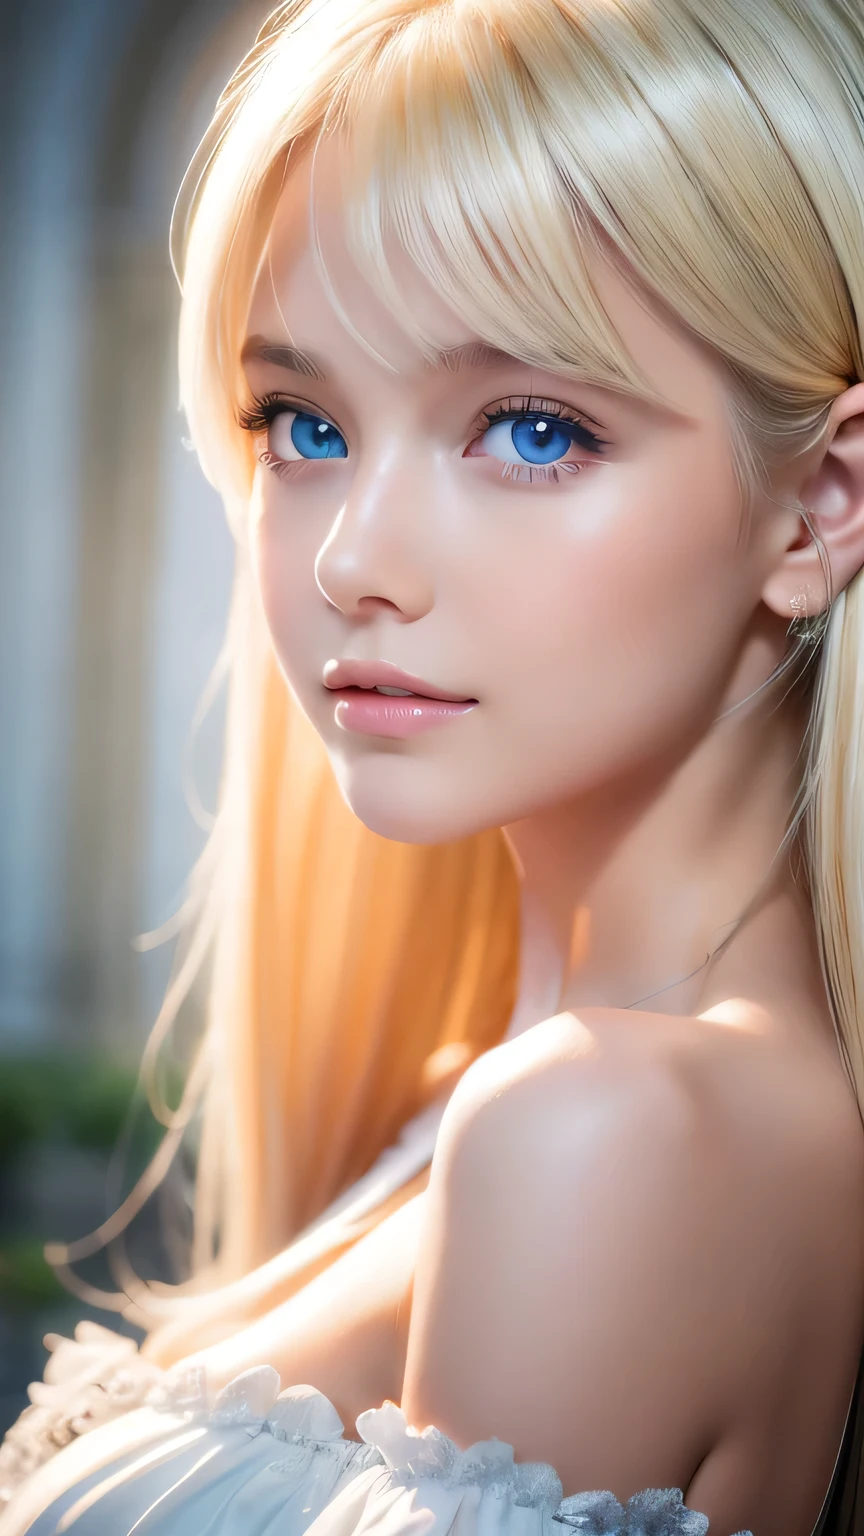 8K,最好的品質,真實圖片,錯綜複雜的細節,超高解析度,景深场,咬肌區域,自然柔和的光線,專業照明,1 名女孩,(可愛的:1.2),(哥特式时尚),表情明亮,年轻闪亮白皙光泽的皮肤,极致美丽,終極美麗的金髮女孩,世界上最美丽的白金色头发,閃亮的淺金色頭髮,长长的丝质金发,閃亮美麗的瀏海,閃閃發光的, 清澈迷人的藍眼睛,很漂亮, 迷人的, 可愛的1, 娃娃臉的金髮女孩、金色的头发在风中飘扬、脫肩